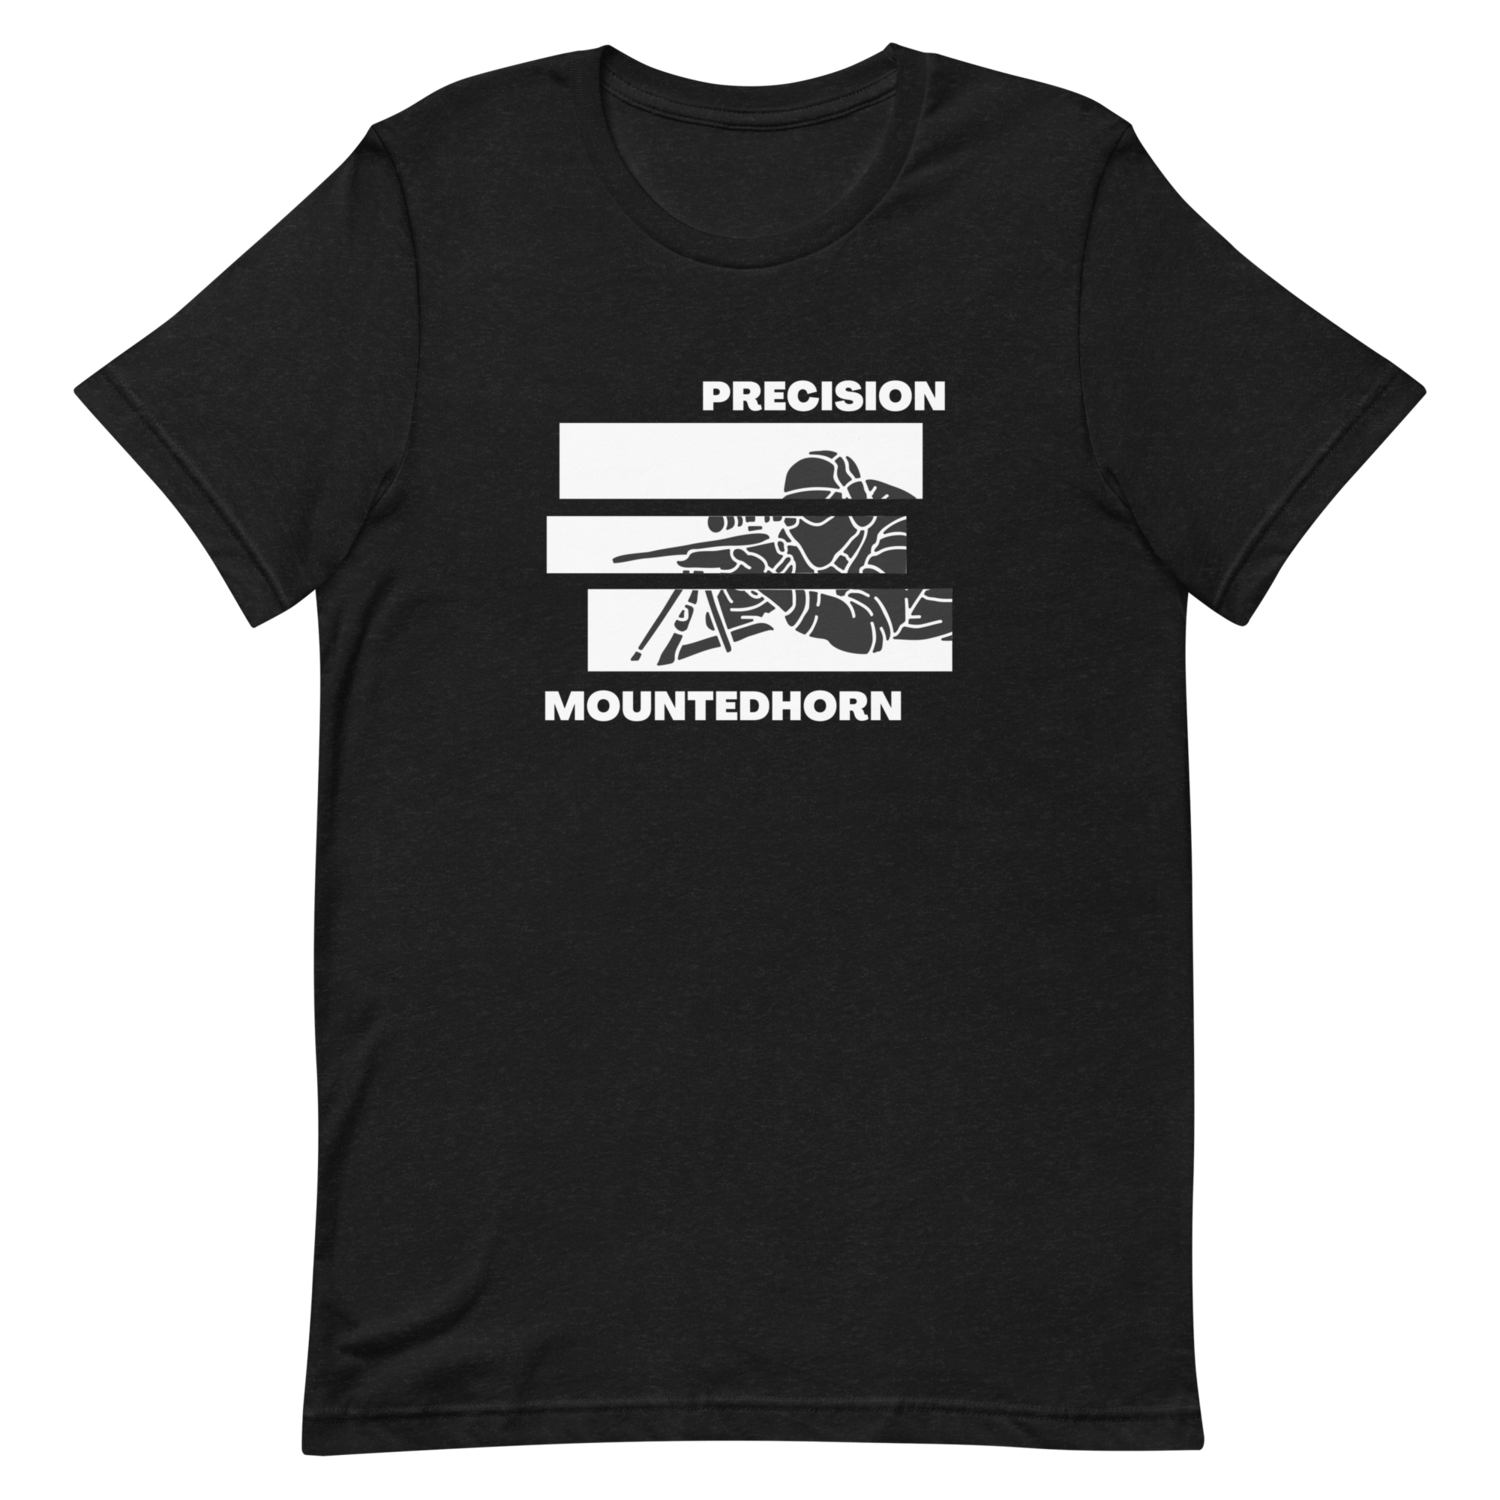 Precision t-shirt